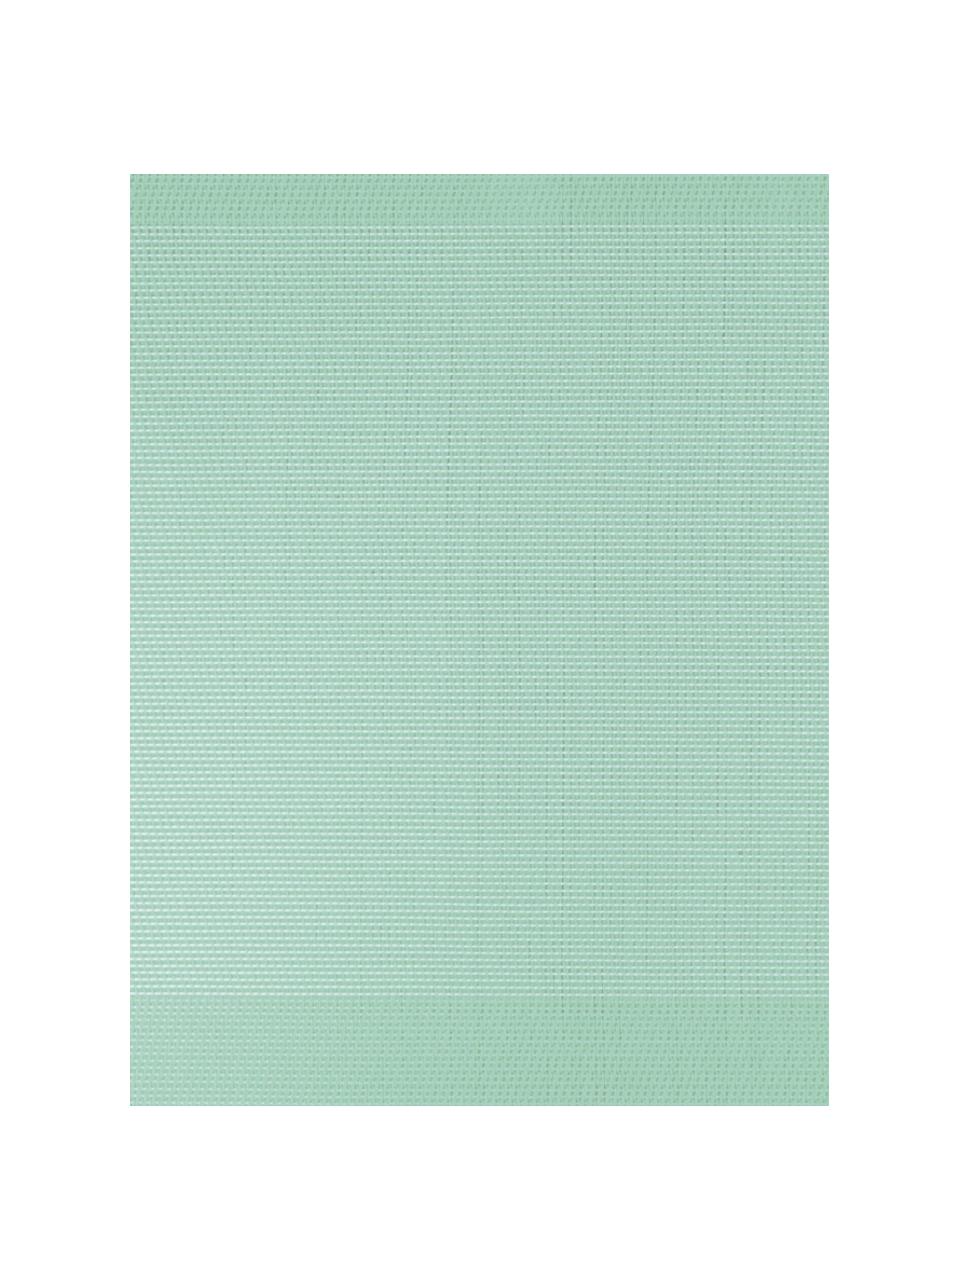 Kunststoff-Tischsets Trefl, 2 Stück, Kunststoff (PVC), Mintgrün, B 33 x L 46 cm